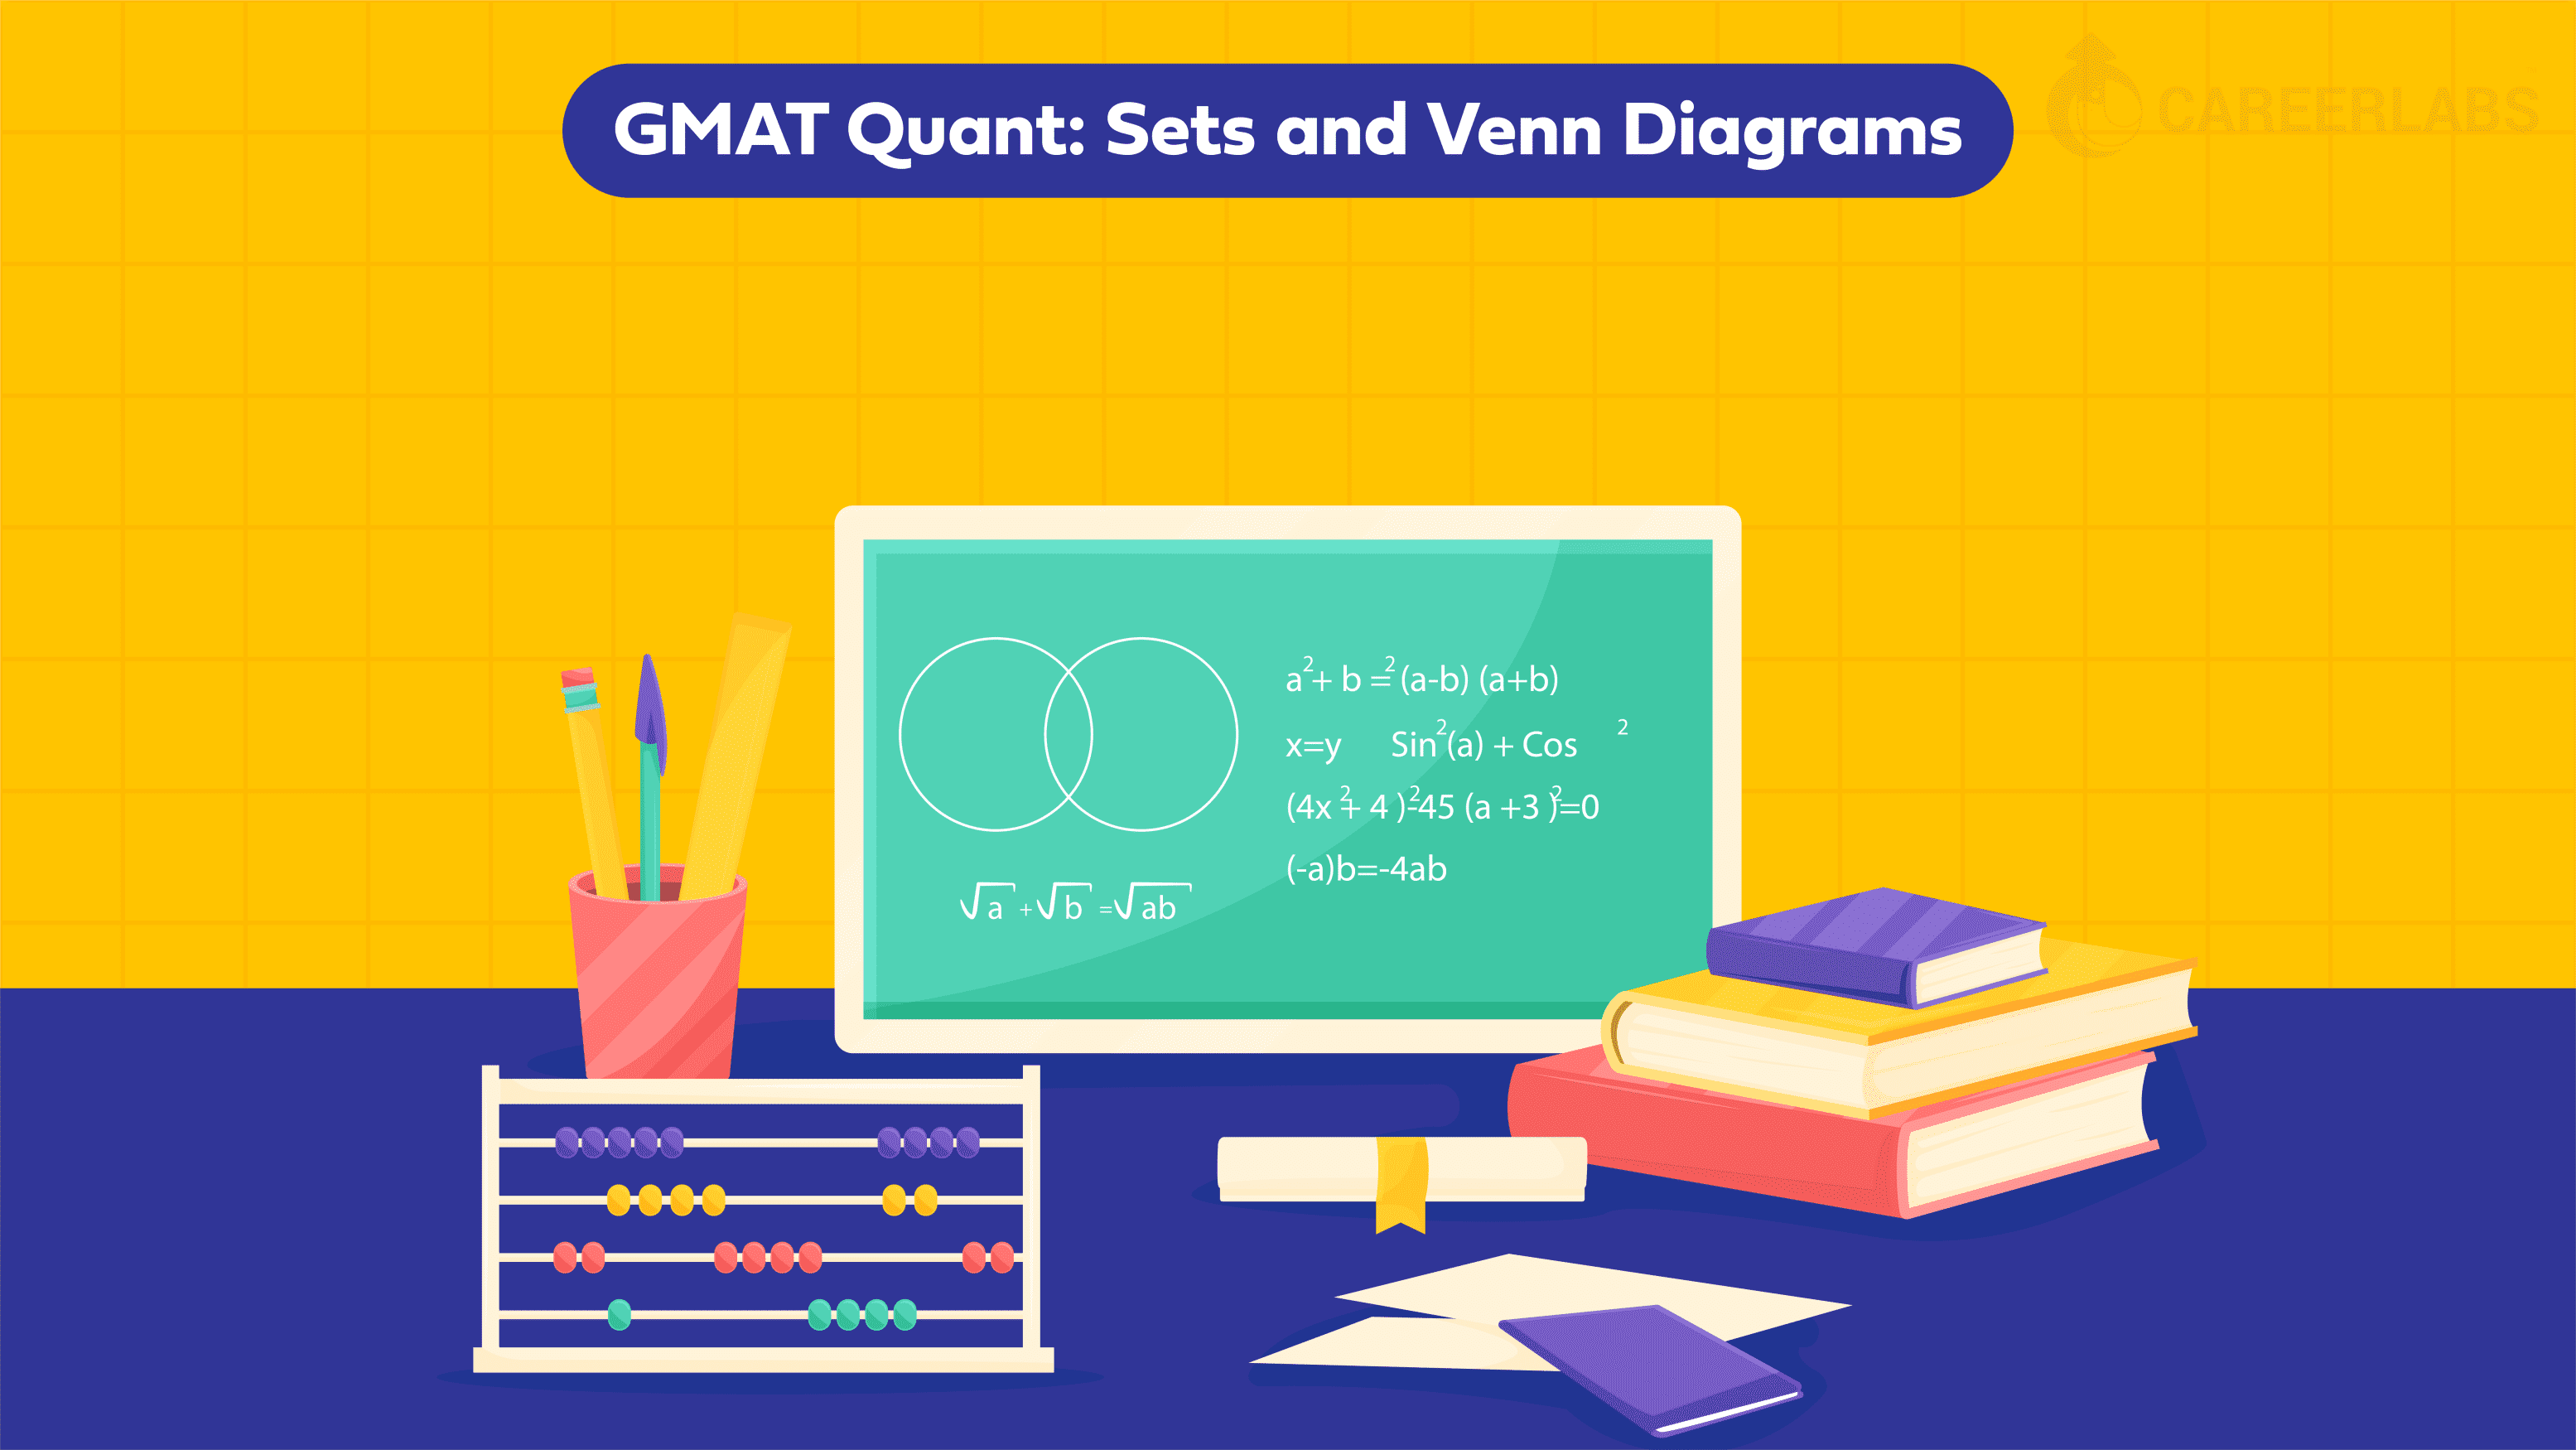 GMAT Quant: Sets and Venn Diagrams